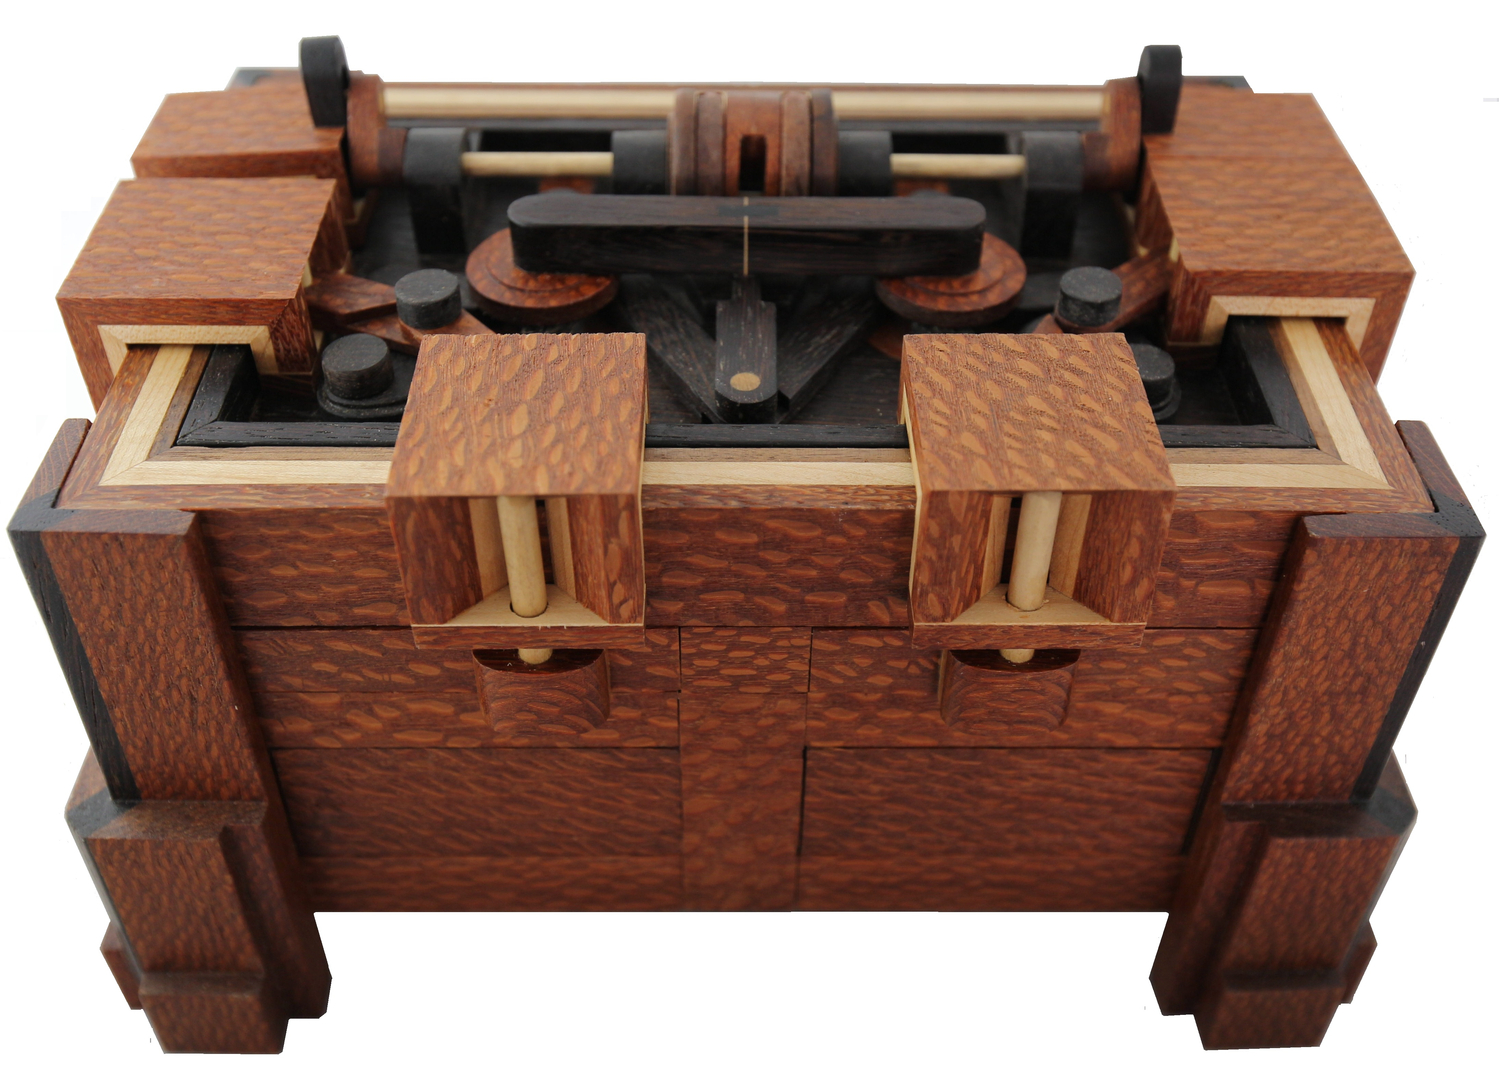 Meet the Makers: Puzzle Box Creator Robert Yarger GPI Design